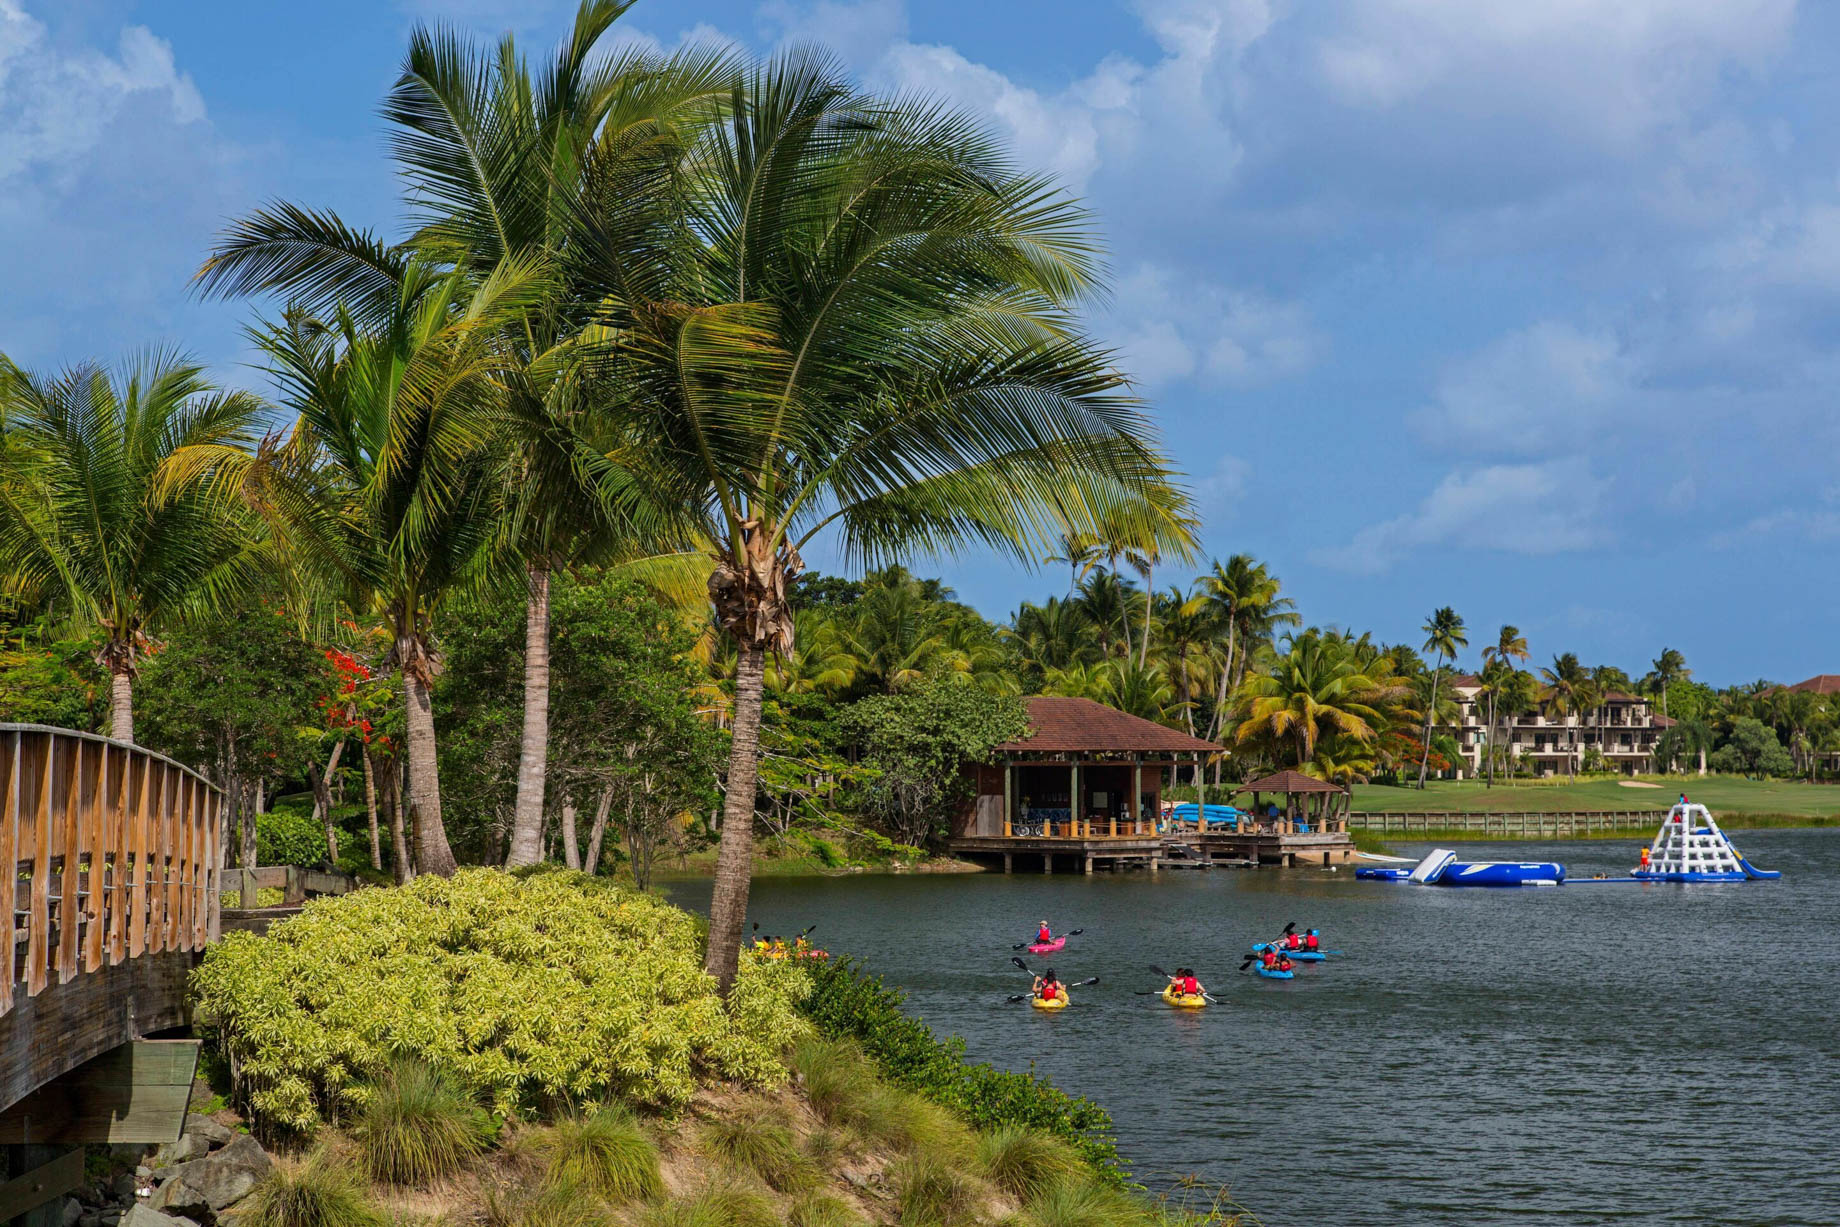 The St. Regis Bahia Beach Resort - Rio Grande, Puerto Rico - Boat House